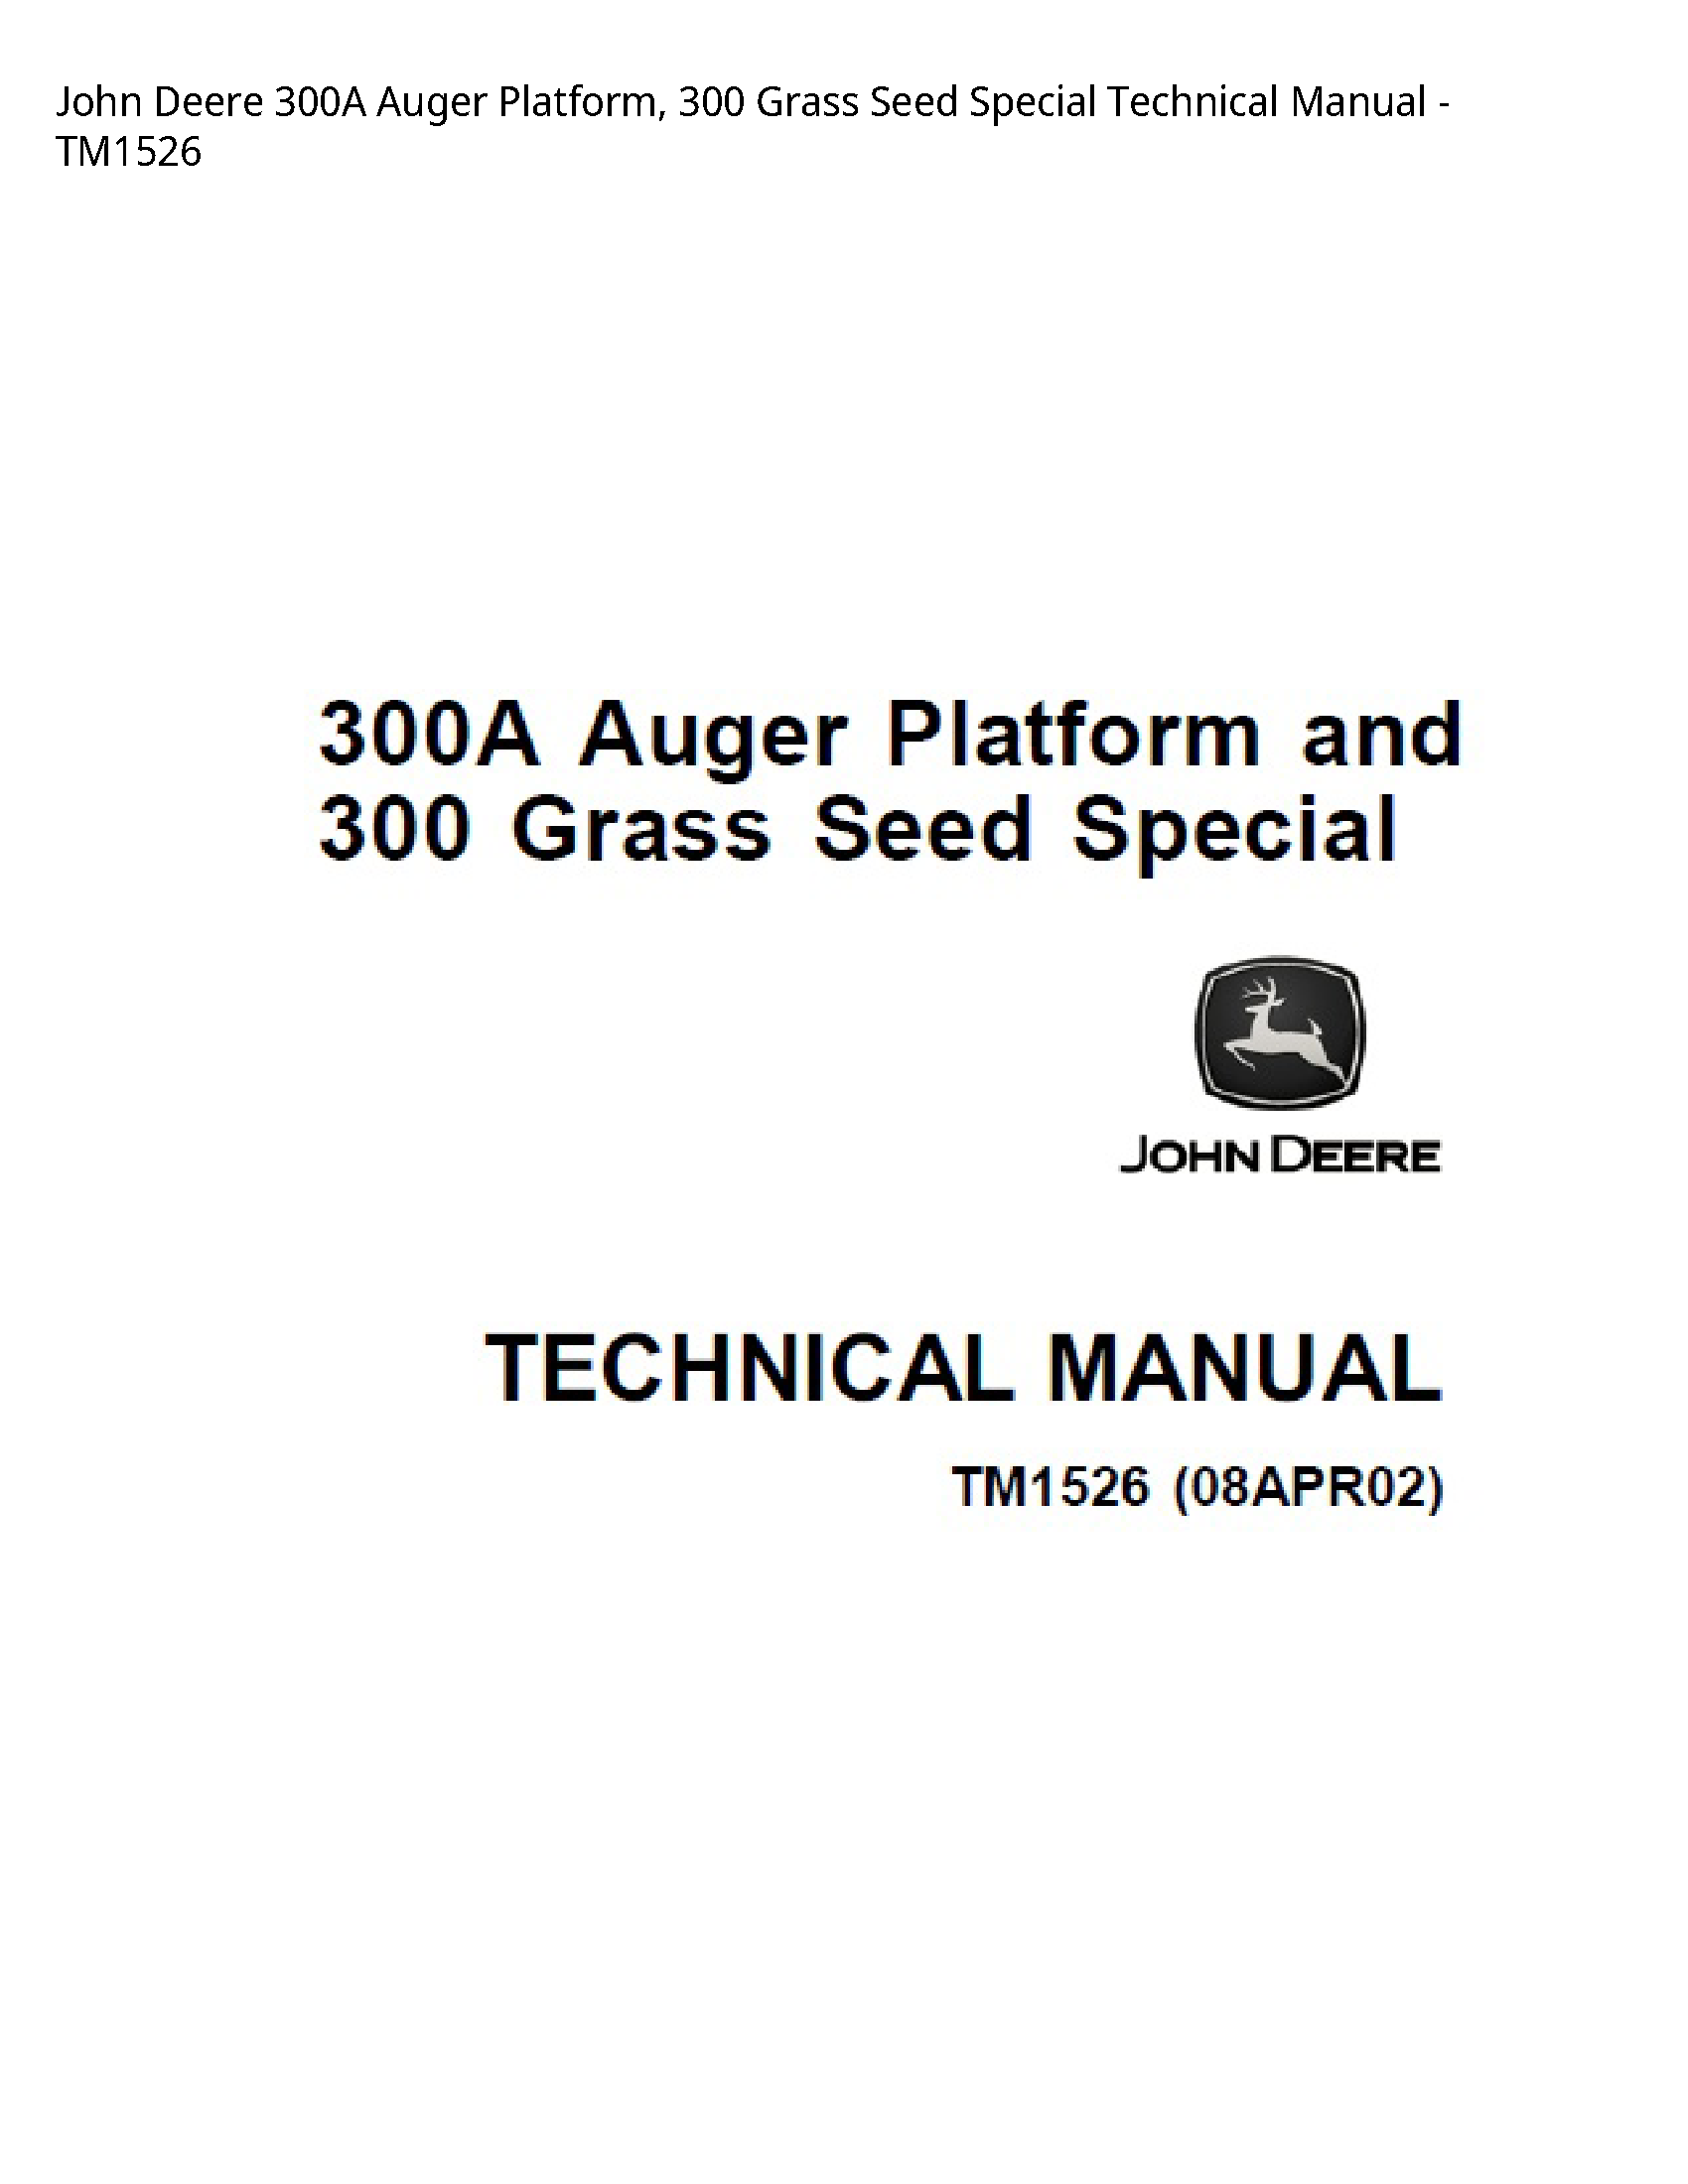 John Deere 300A Auger Platform manual